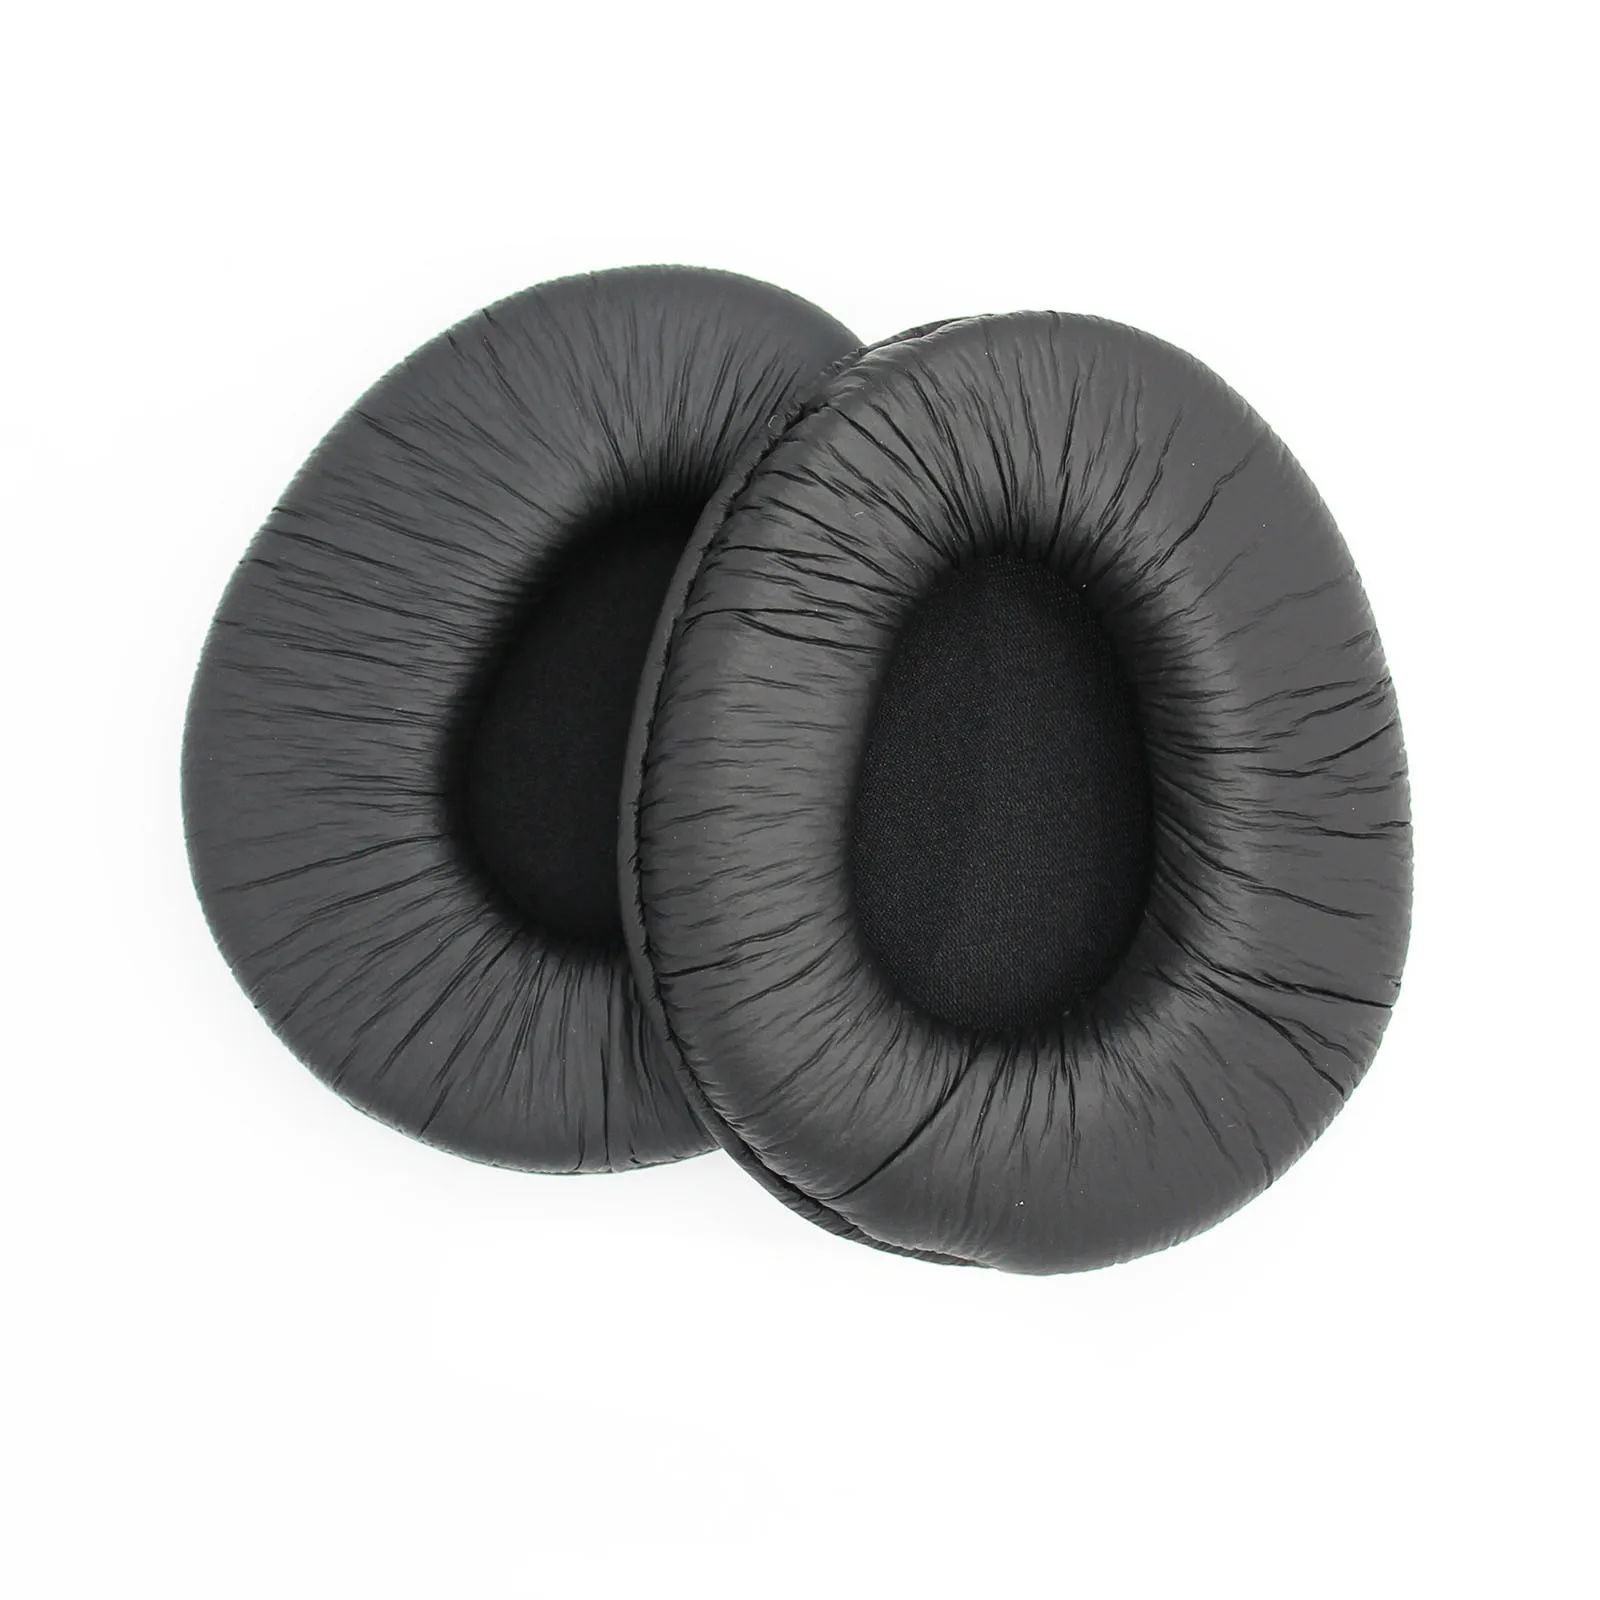 

BINMER Futural Digital Replacement Ear Pad Cushions for SONY MDR-V900 MDR-V600 Z600 7509 Soft Memory Foam Cushion Ear pad